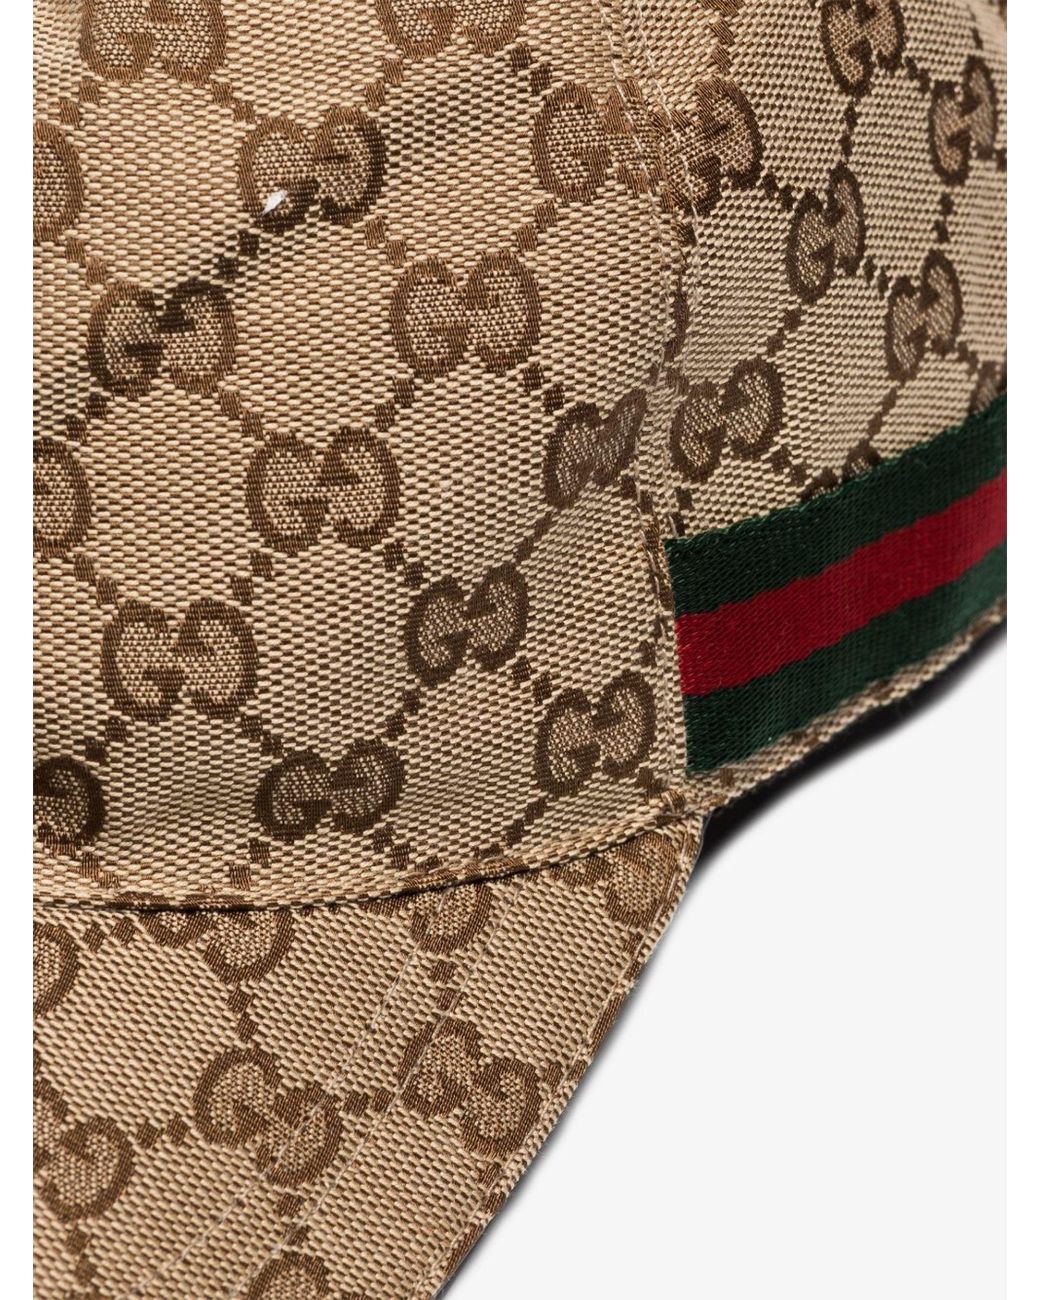 Gucci Cotton GG Web Stripe Baseball Cap in Beige (Brown) for Men - Save 16%  - Lyst